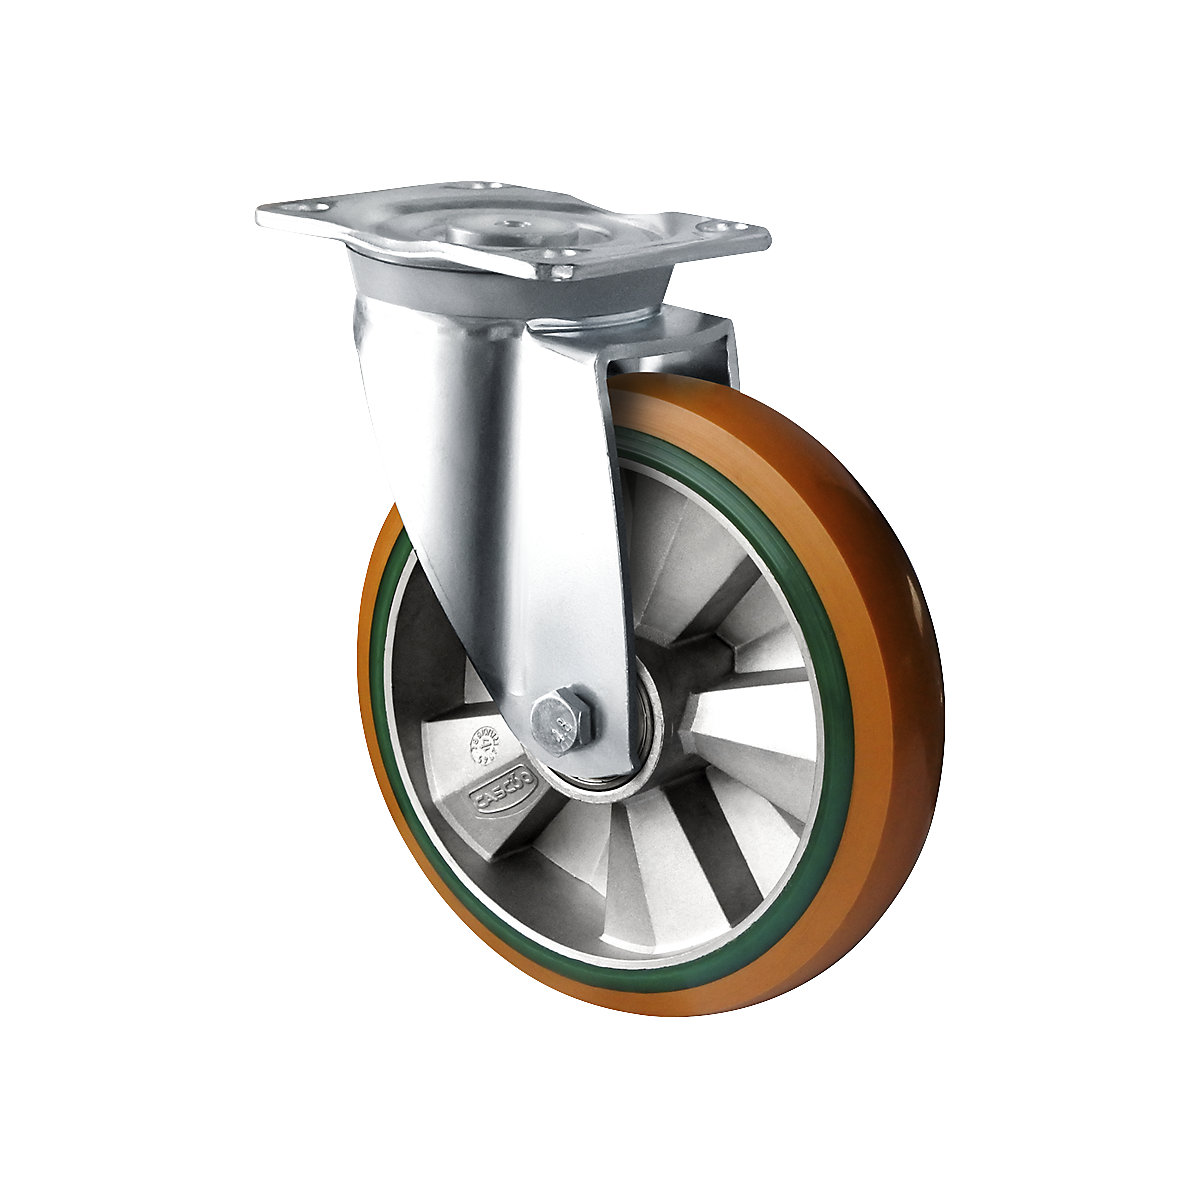 PU/PU elastic tyre, brown / green, wheel Ø x width 160 x 50 mm, 2+ items, swivel castor